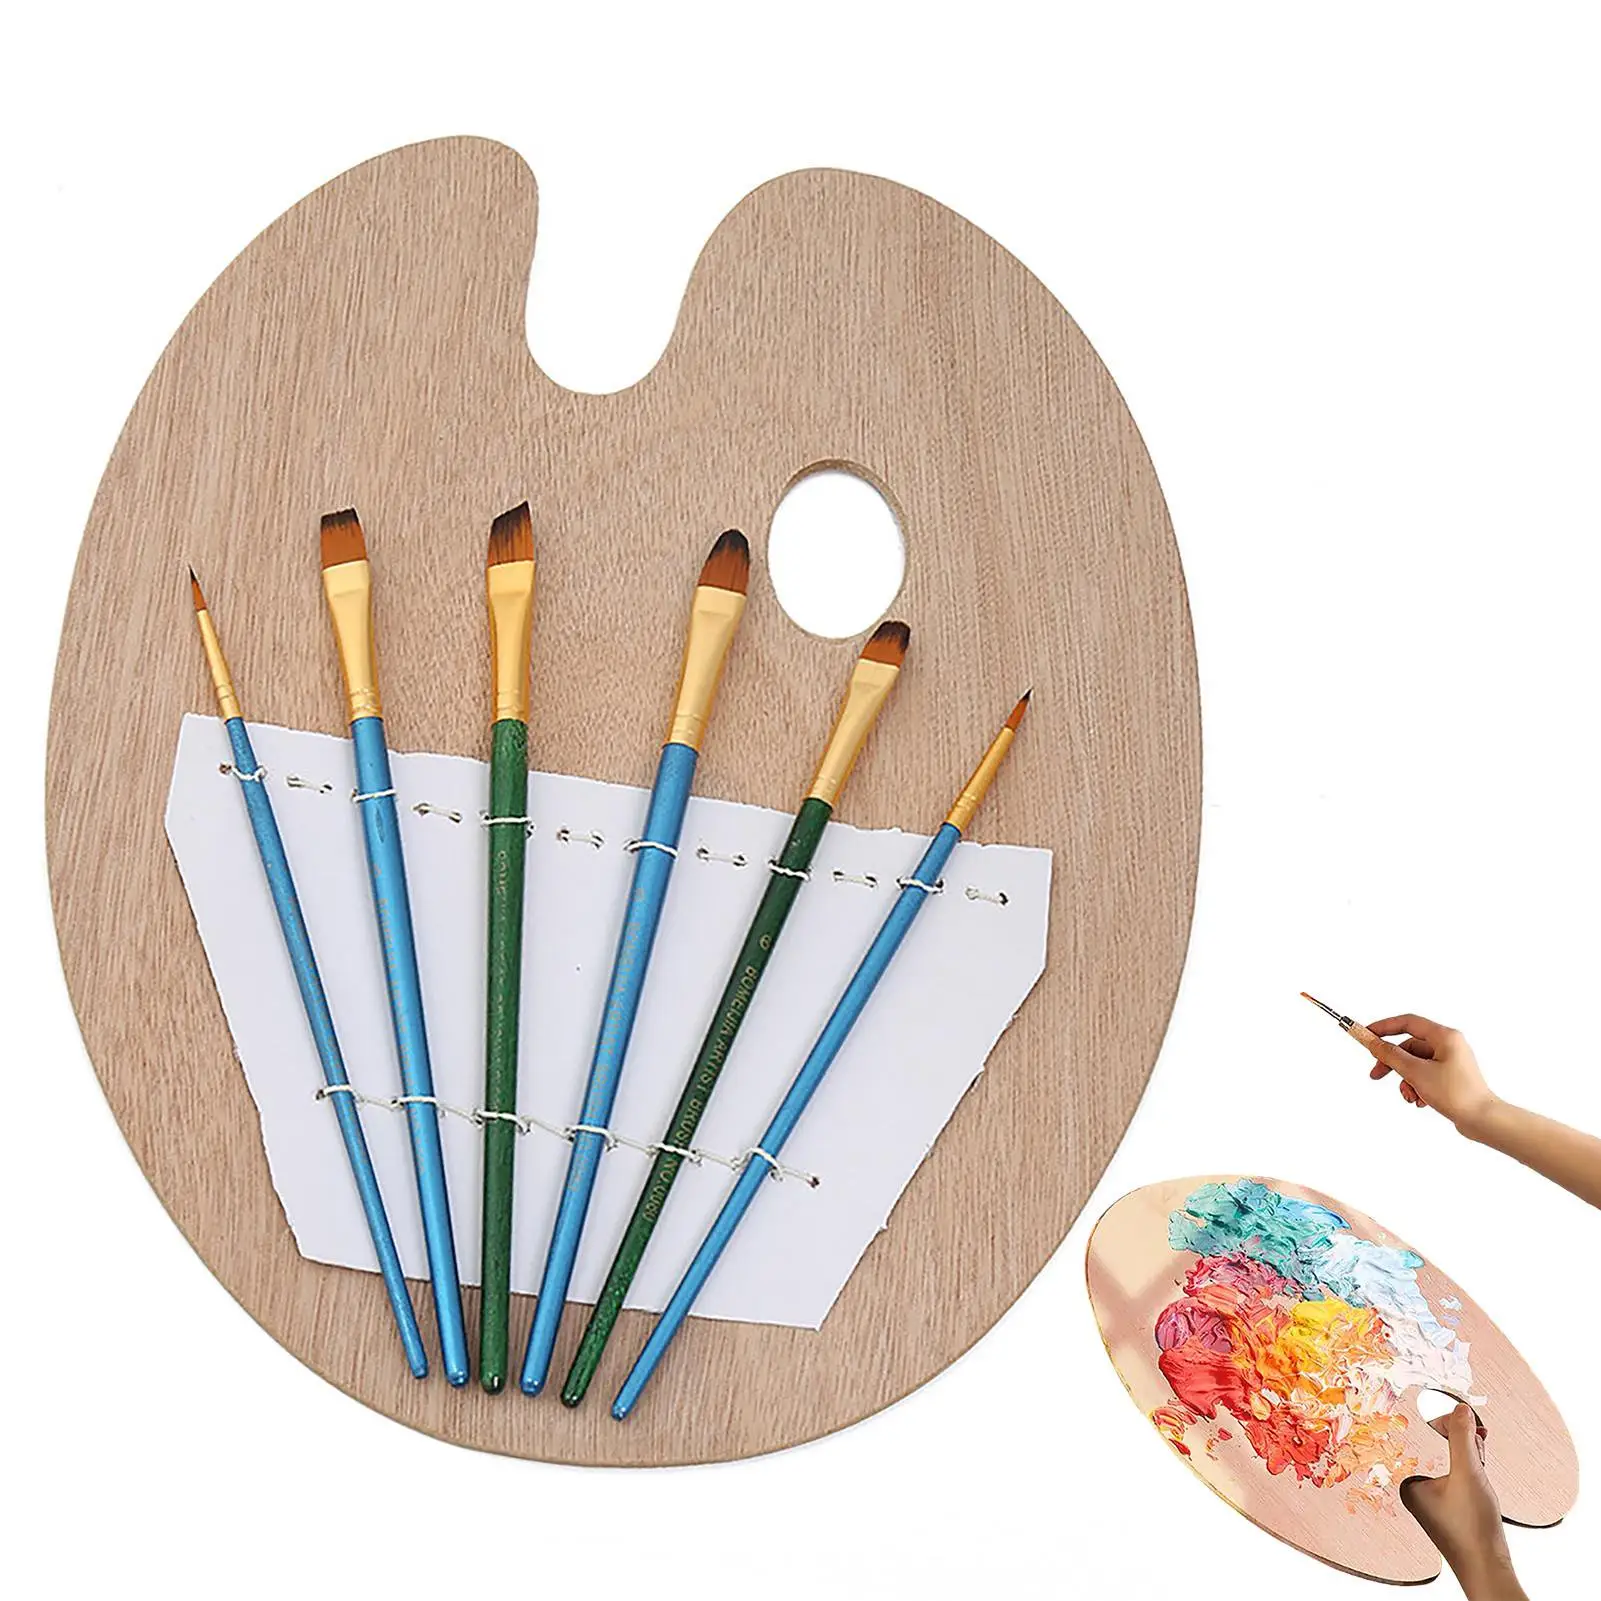 Artist Paint Brush Set with Wood Painting Palette Premium Round & Flat Bristle Paintbrushes Fun Kids Adults Students School